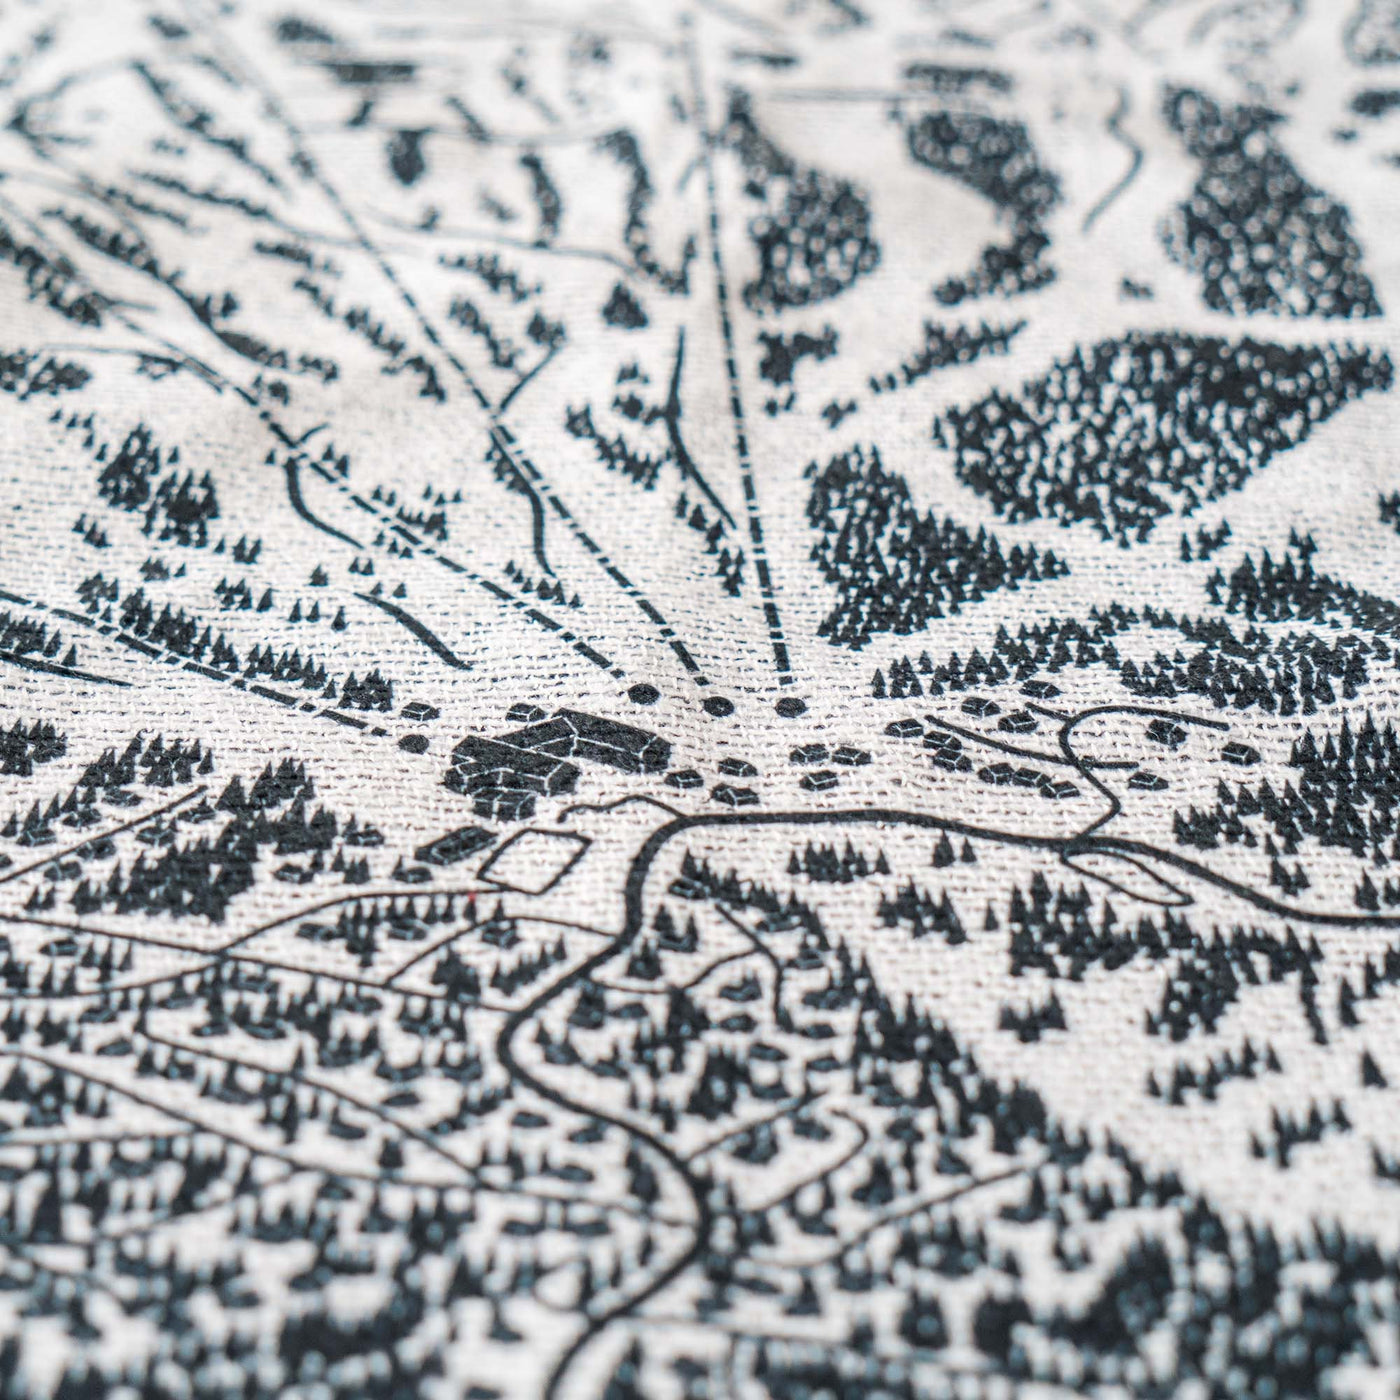 Whistler Blackcomb, British Columbia Ski Trail Map Blankets